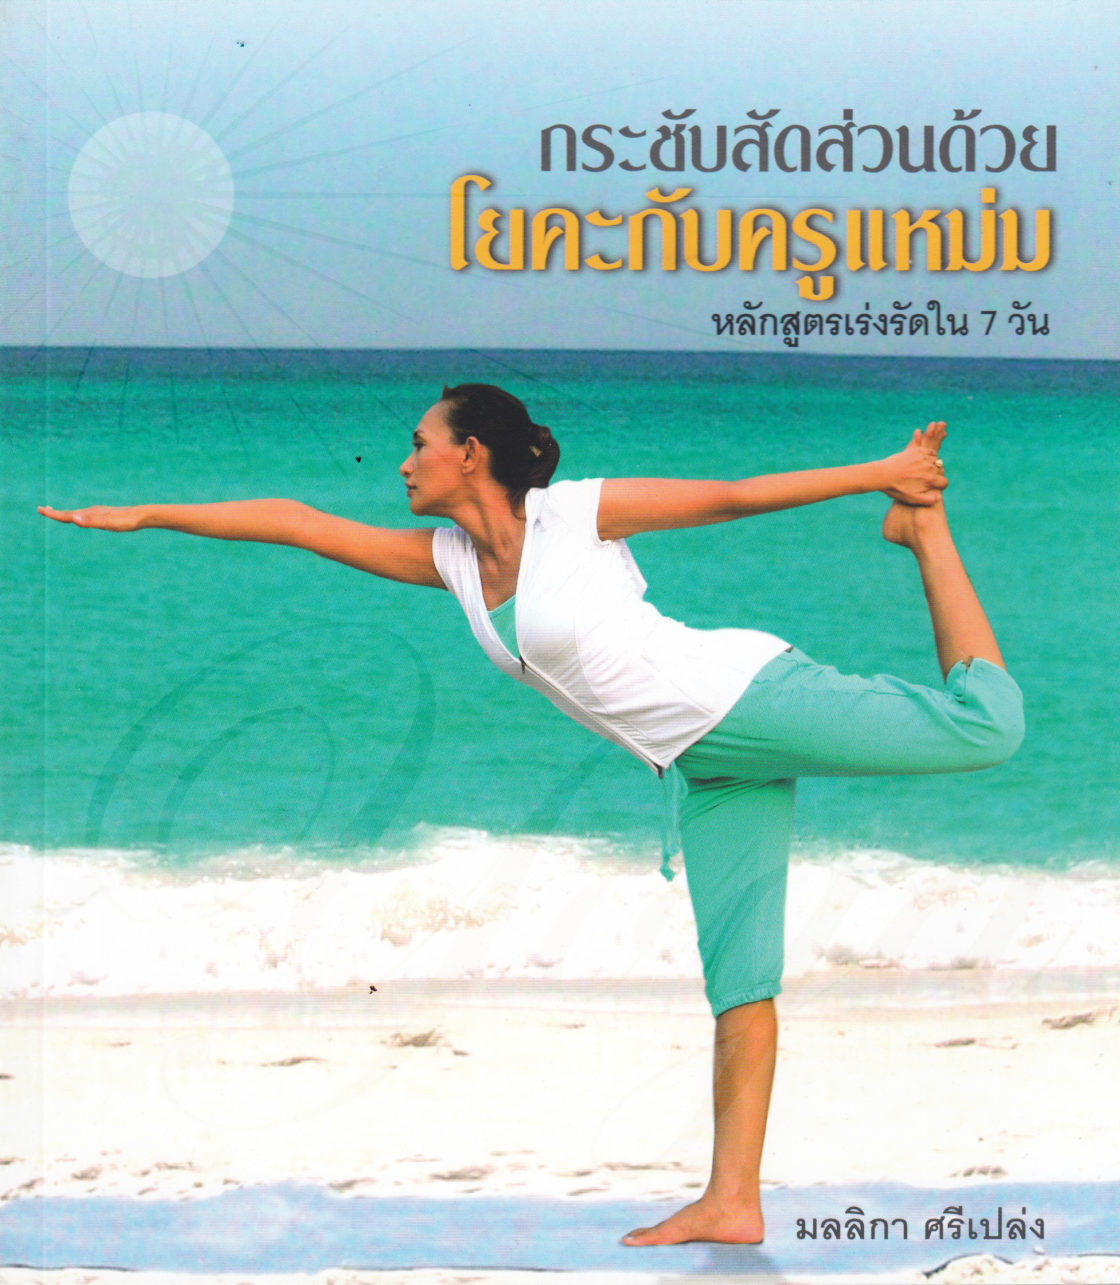 Slimming with Yoga teacher (Thai)